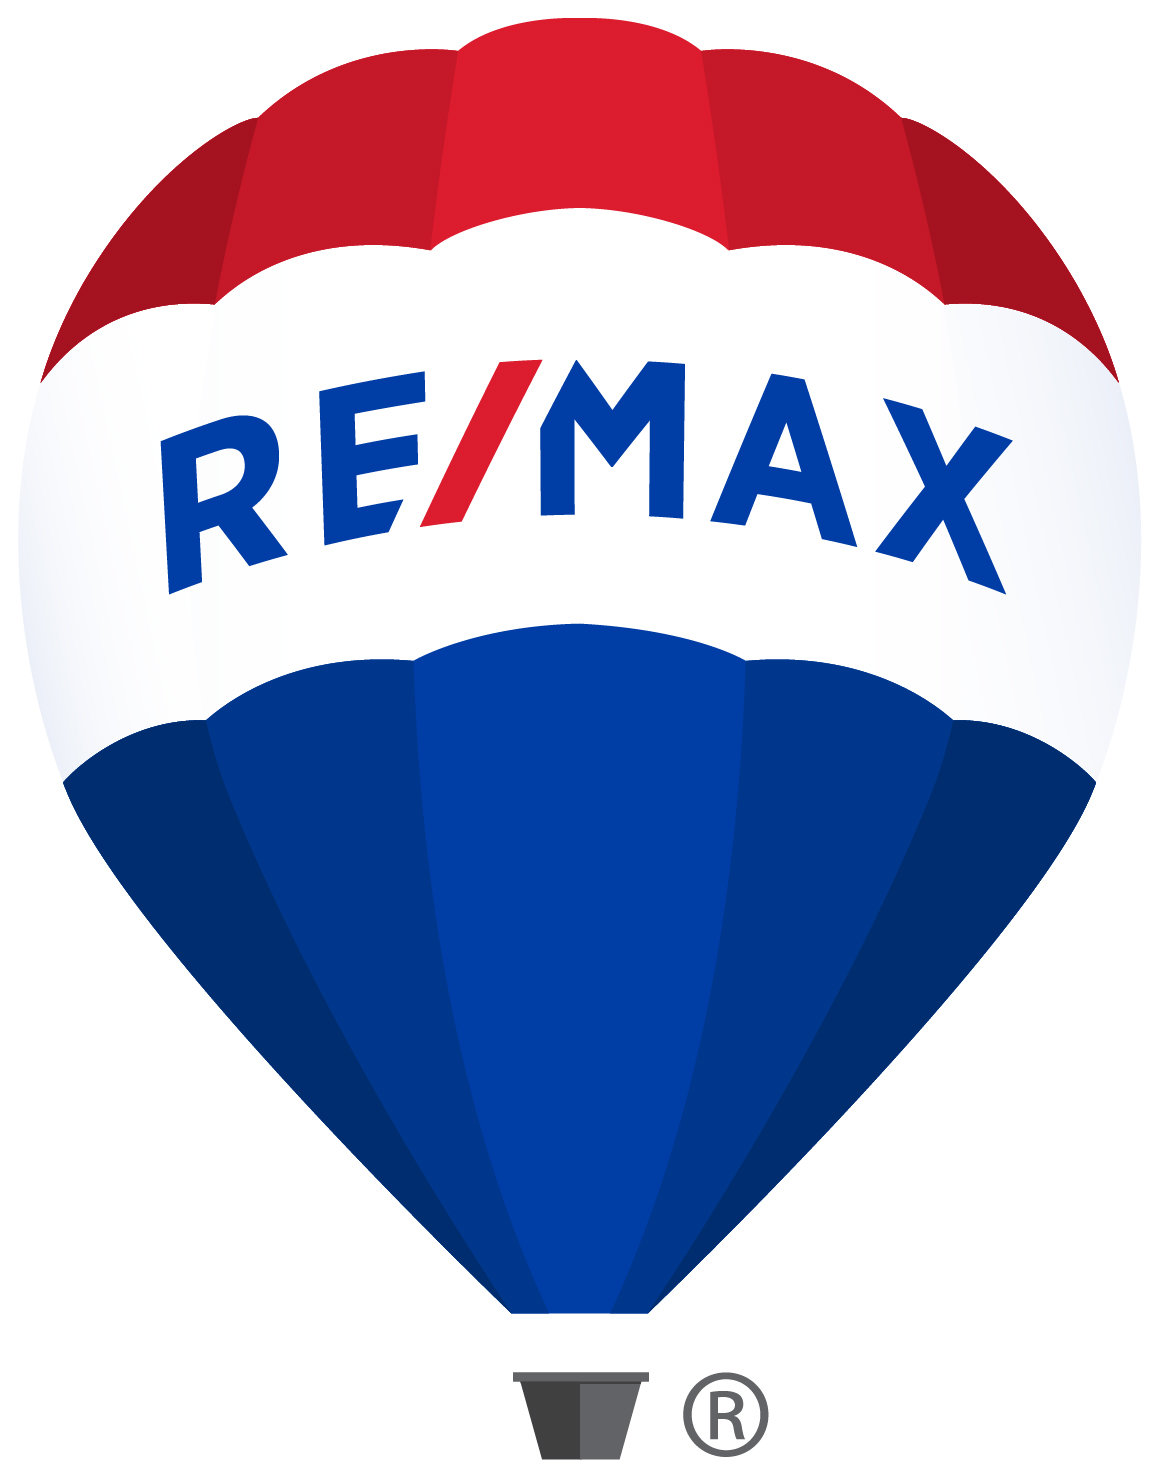 RE/MAX Balloon